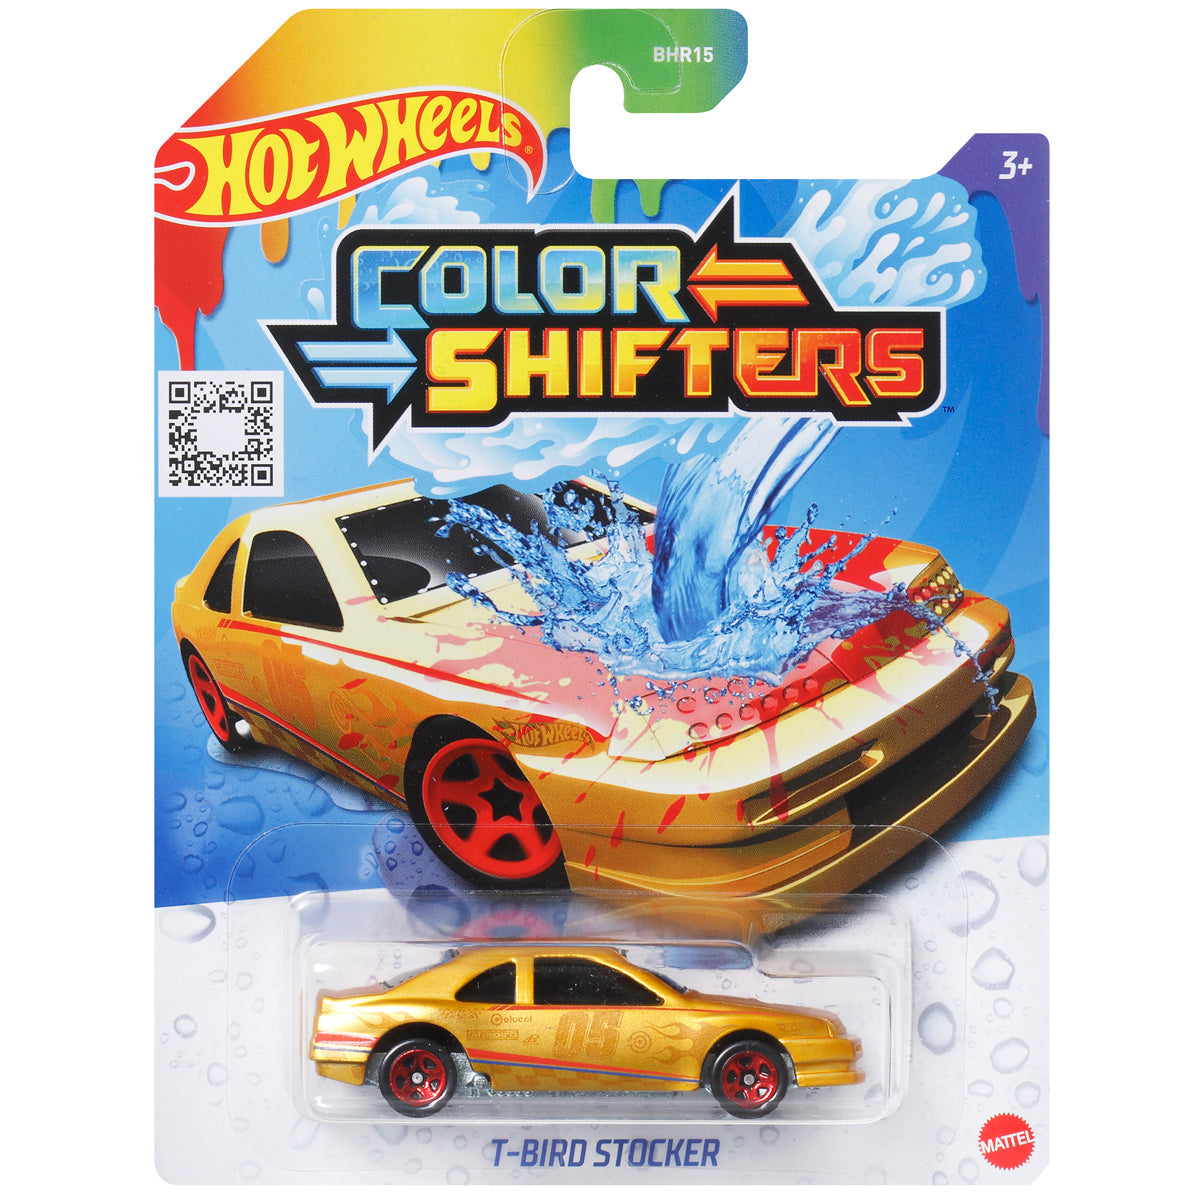 Mattel-Hot Wheels Color Shifters Assortment - T-Bird Stocker-W4117-Legacy Toys